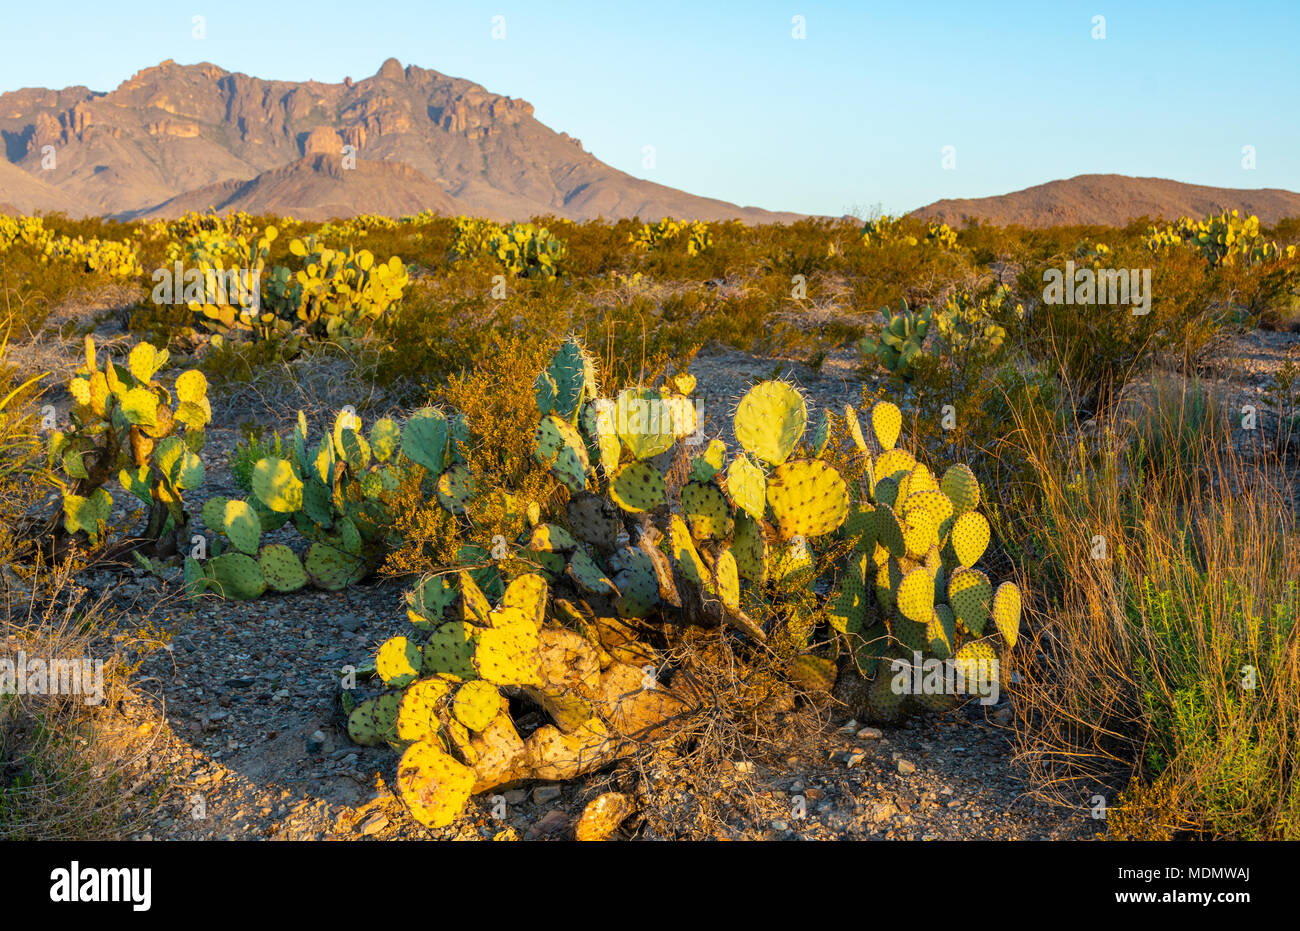 Texas, el Parque Nacional de Big Bend, piragua, pozos, Desierto Chihuahuense Nature Trail, cactus, Montañas Chisos Foto de stock